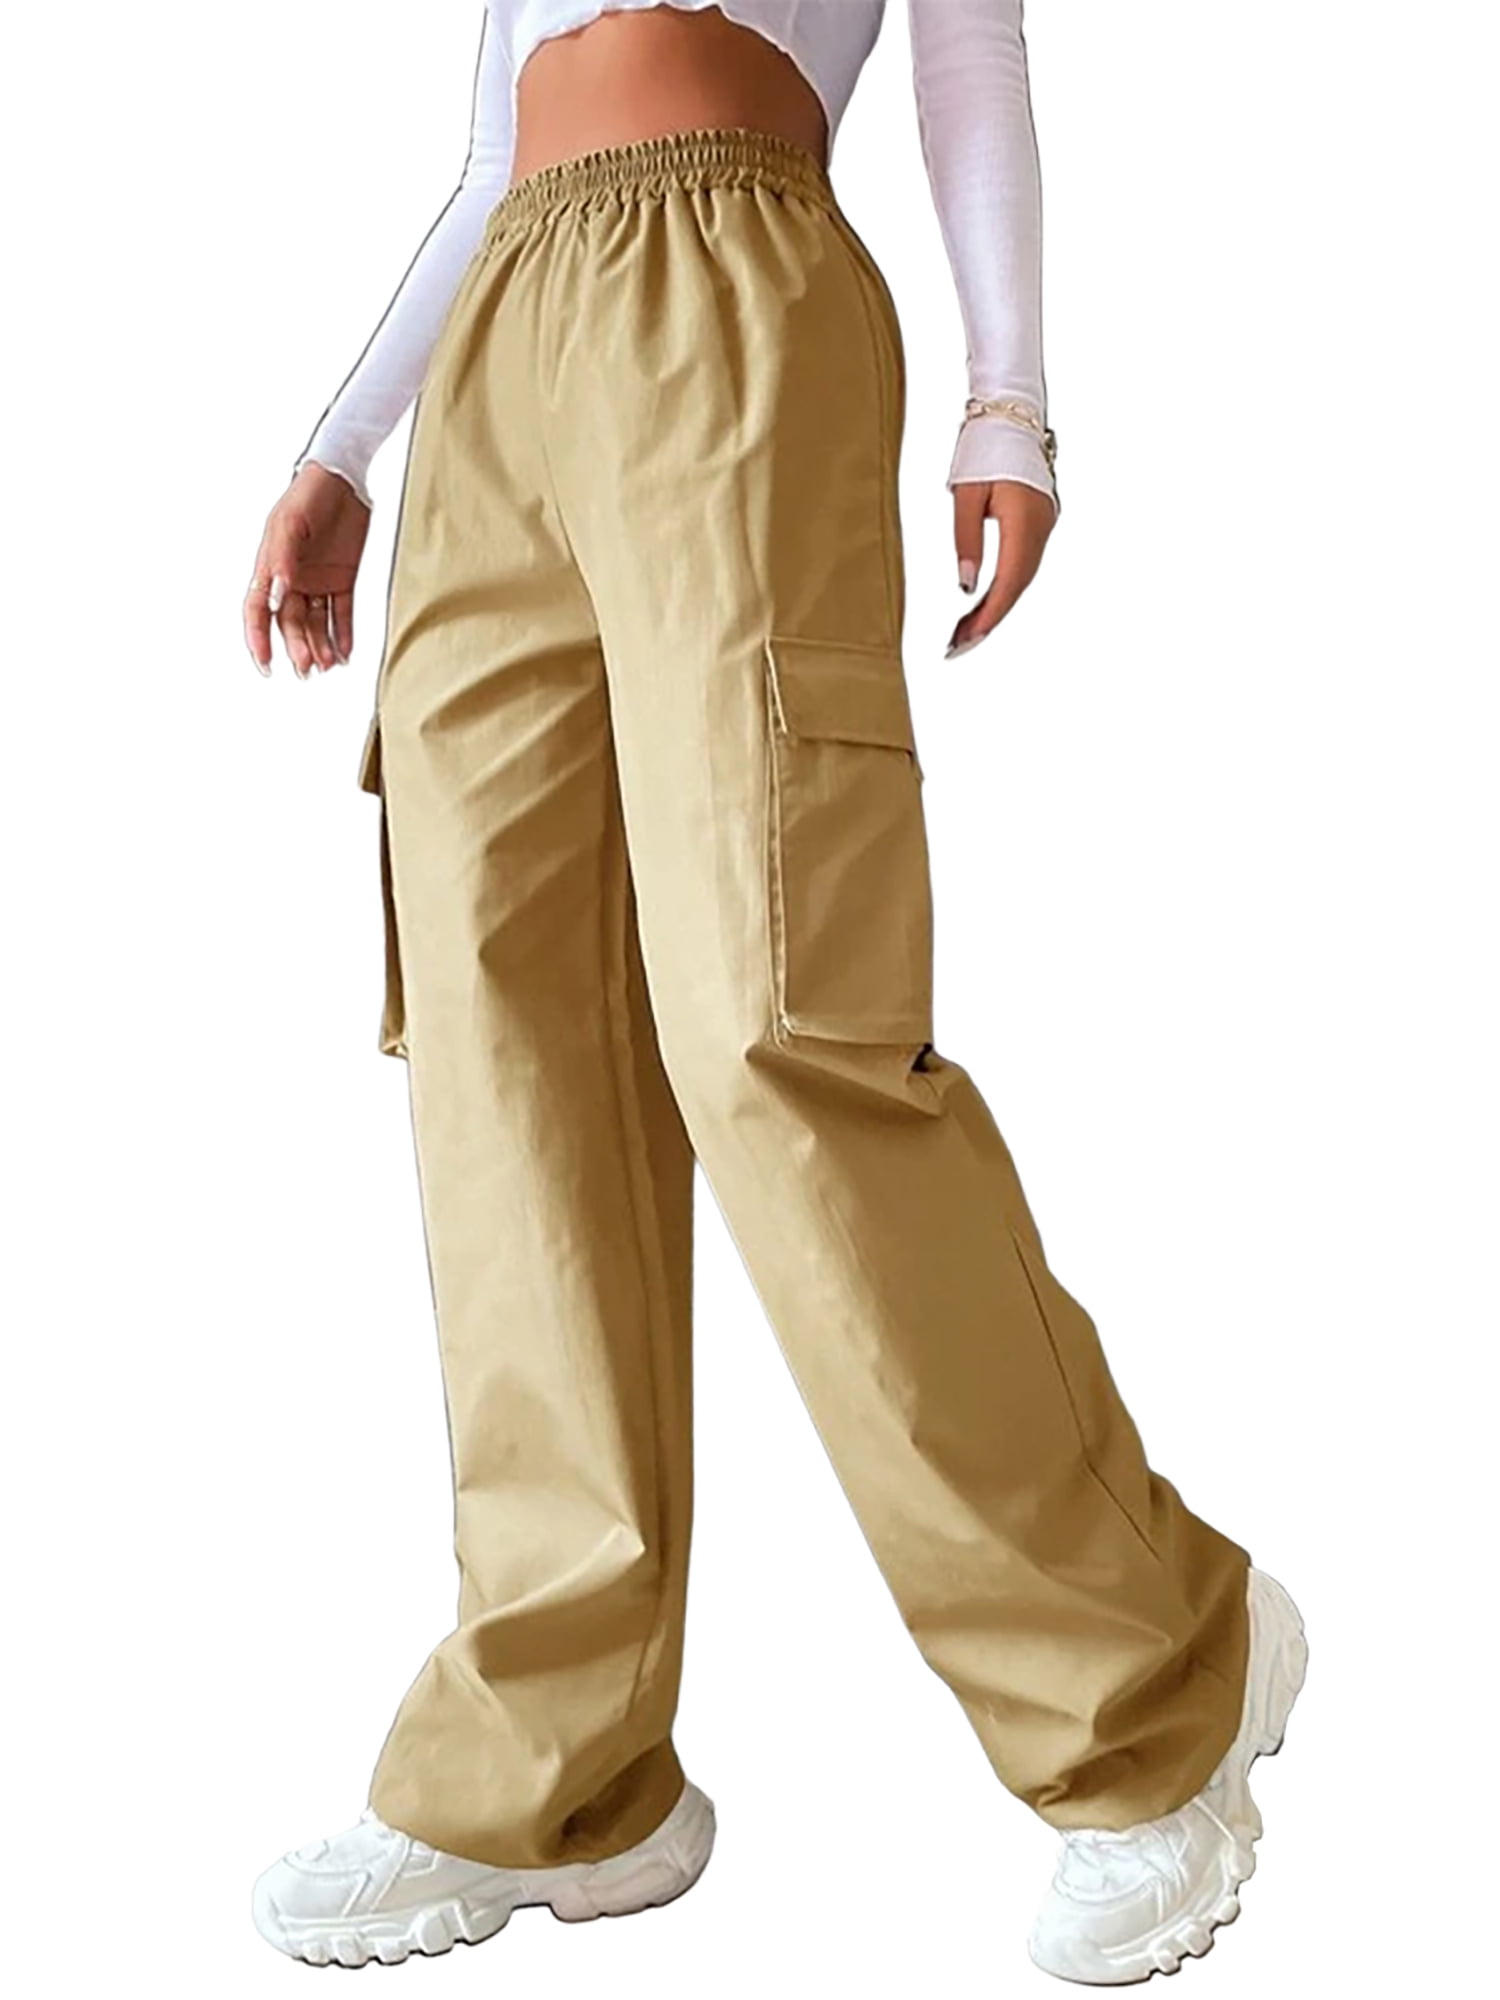 HDE Yoga Dress Pants for Women Straight Leg Pull On Pants with 8 Pockets  Khaki - M Long 